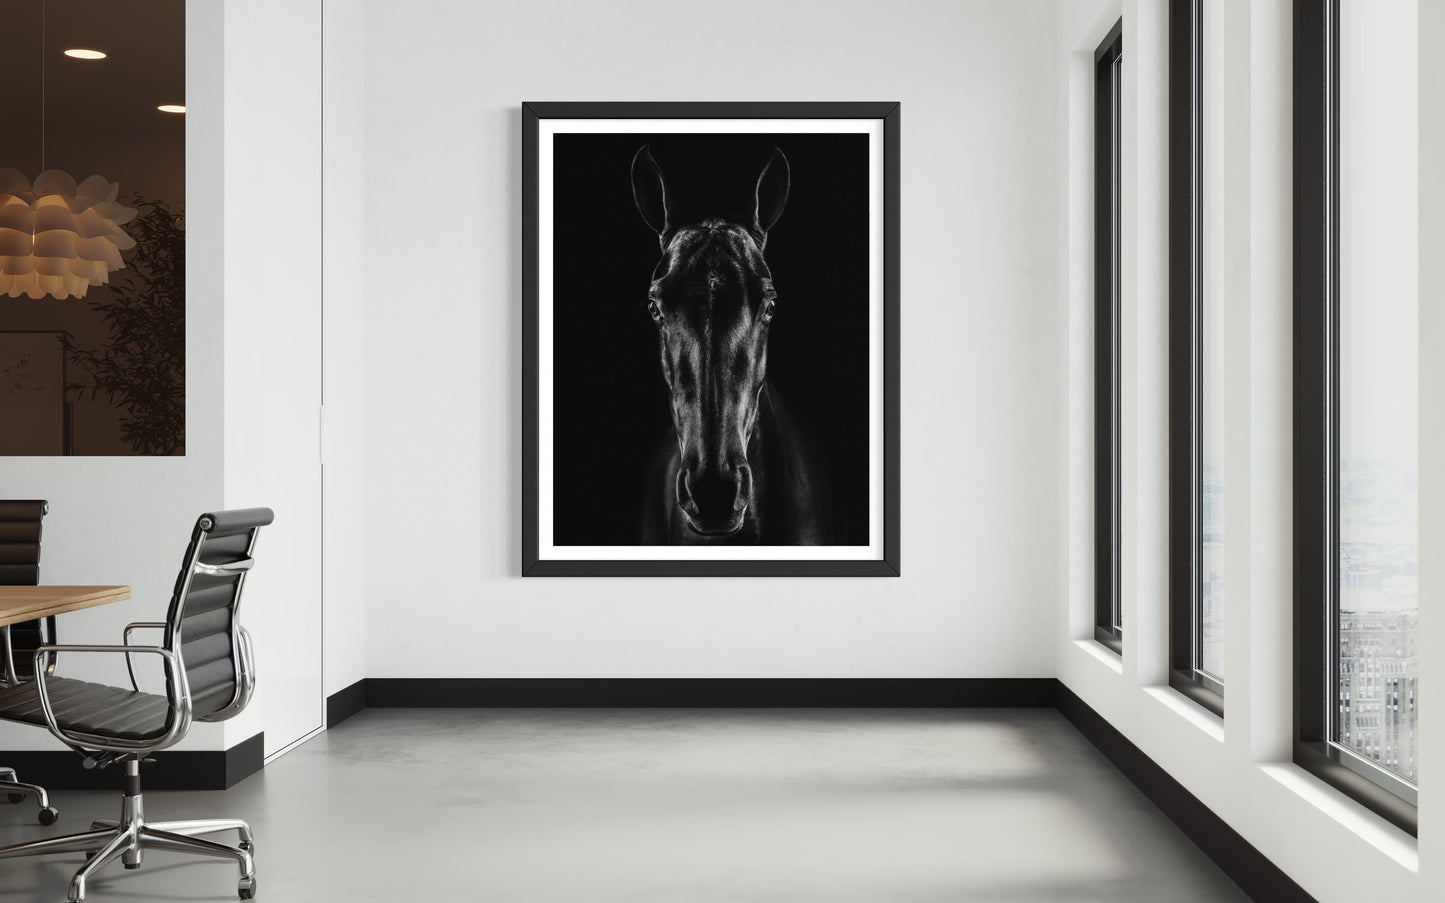 The Horse in Noir